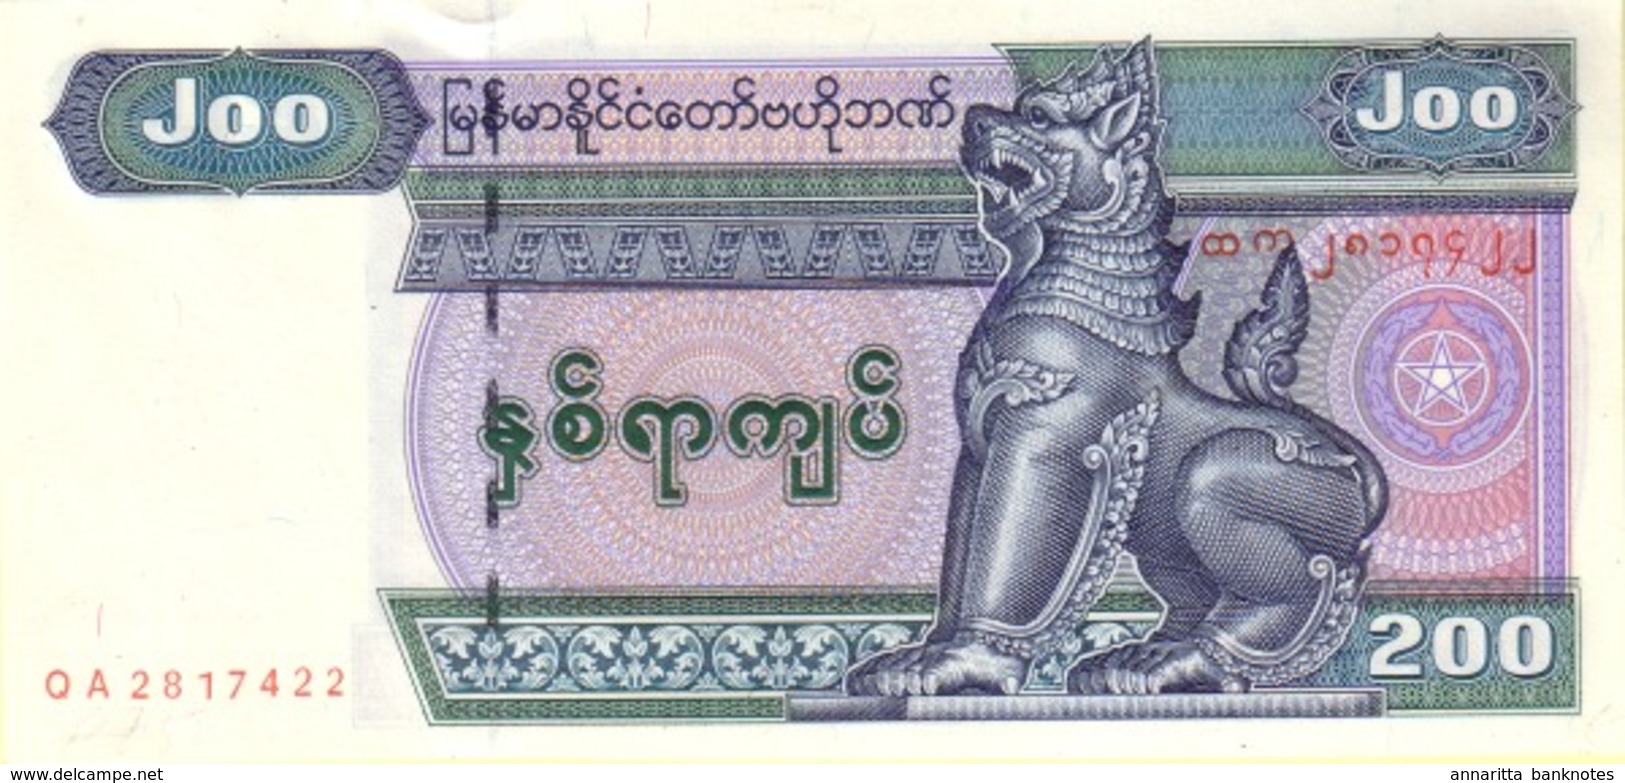 MYANMAR 200 KYATS ND (2004) P-78a UNC REDUCED SIZE [MM112a] - Myanmar